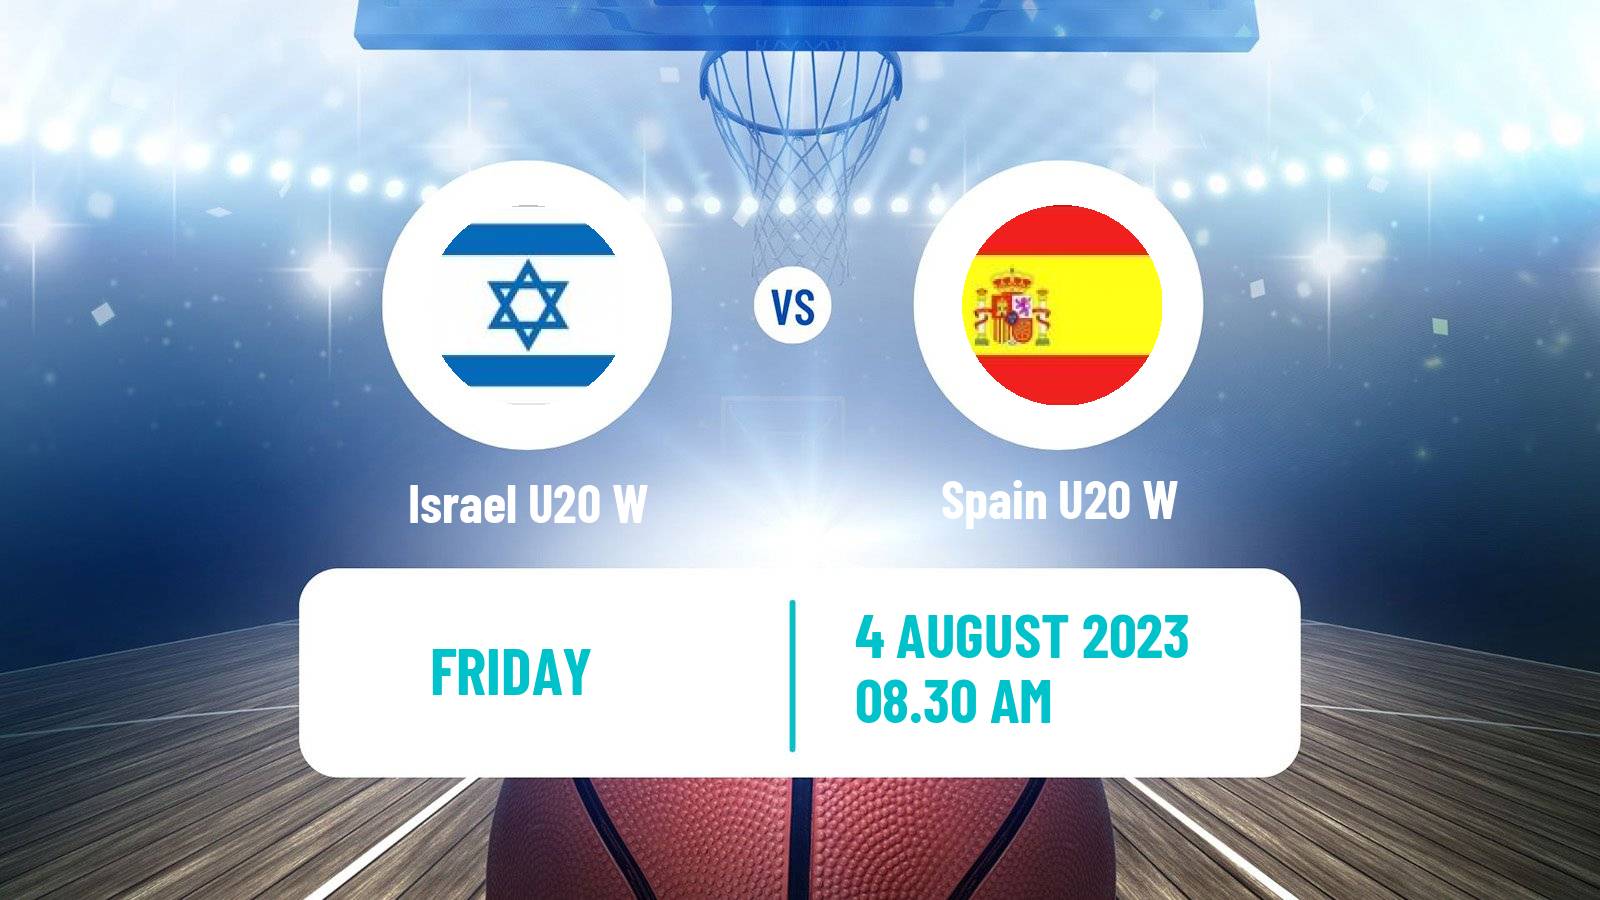 Basketball European Championship U20 Basketball Women Israel U20 W - Spain U20 W